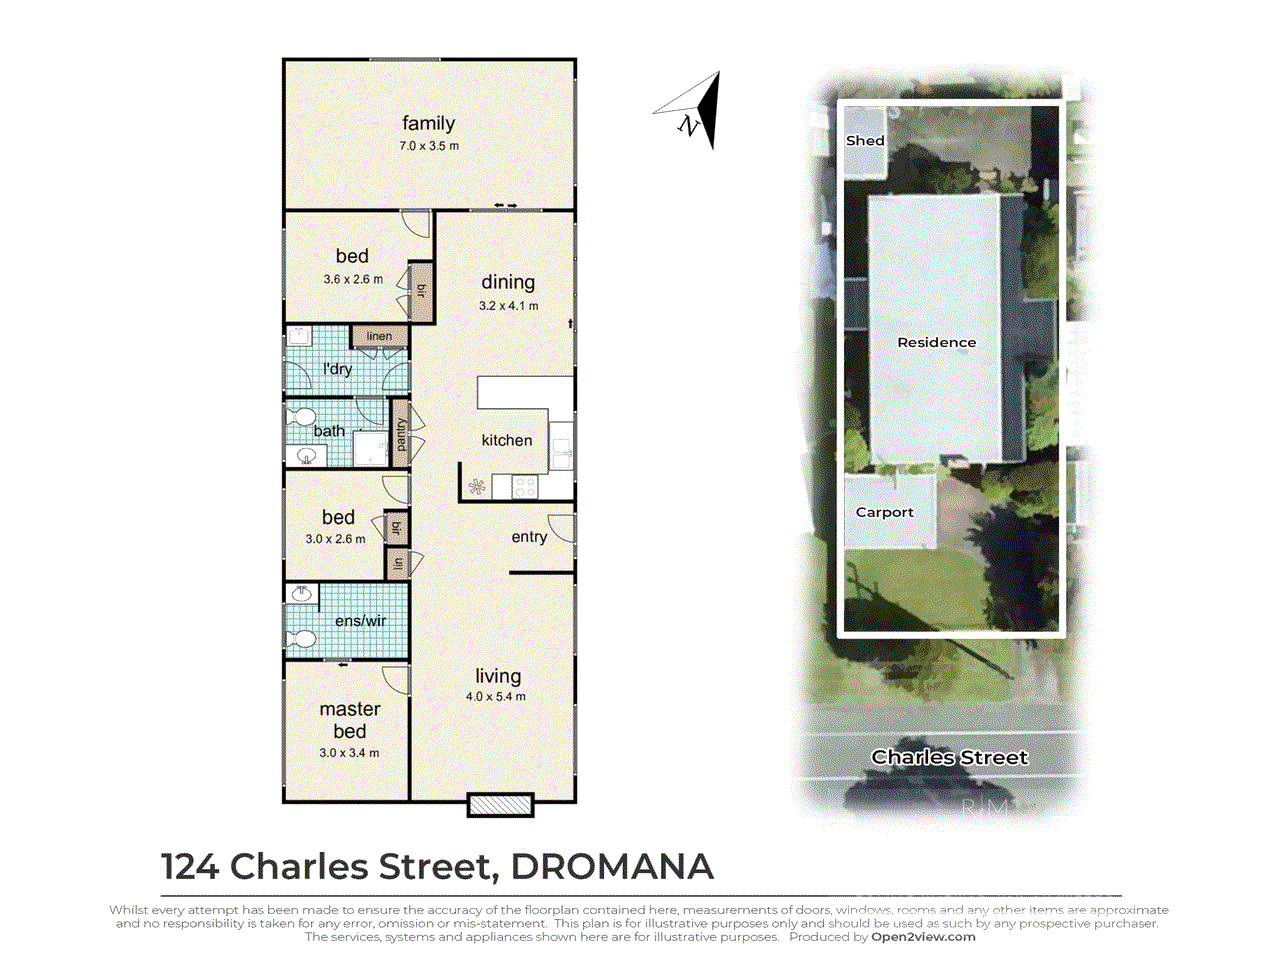 124 Charles Street, Dromana, Vic 3936